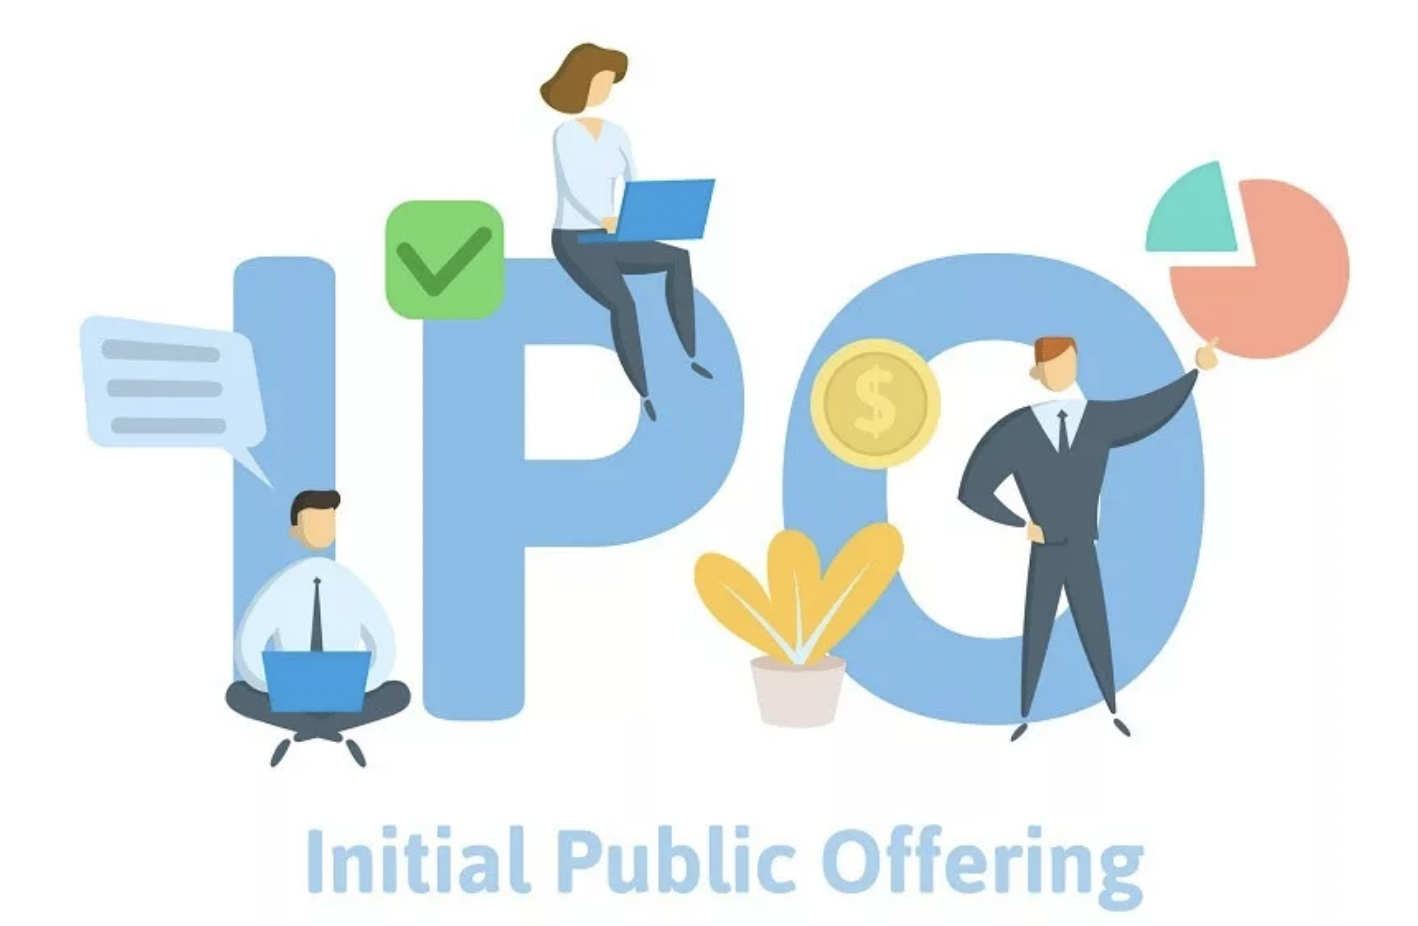 Public offer. IPO картинки для презентации. IPO баннер. IPO цели. Этапы IPO.